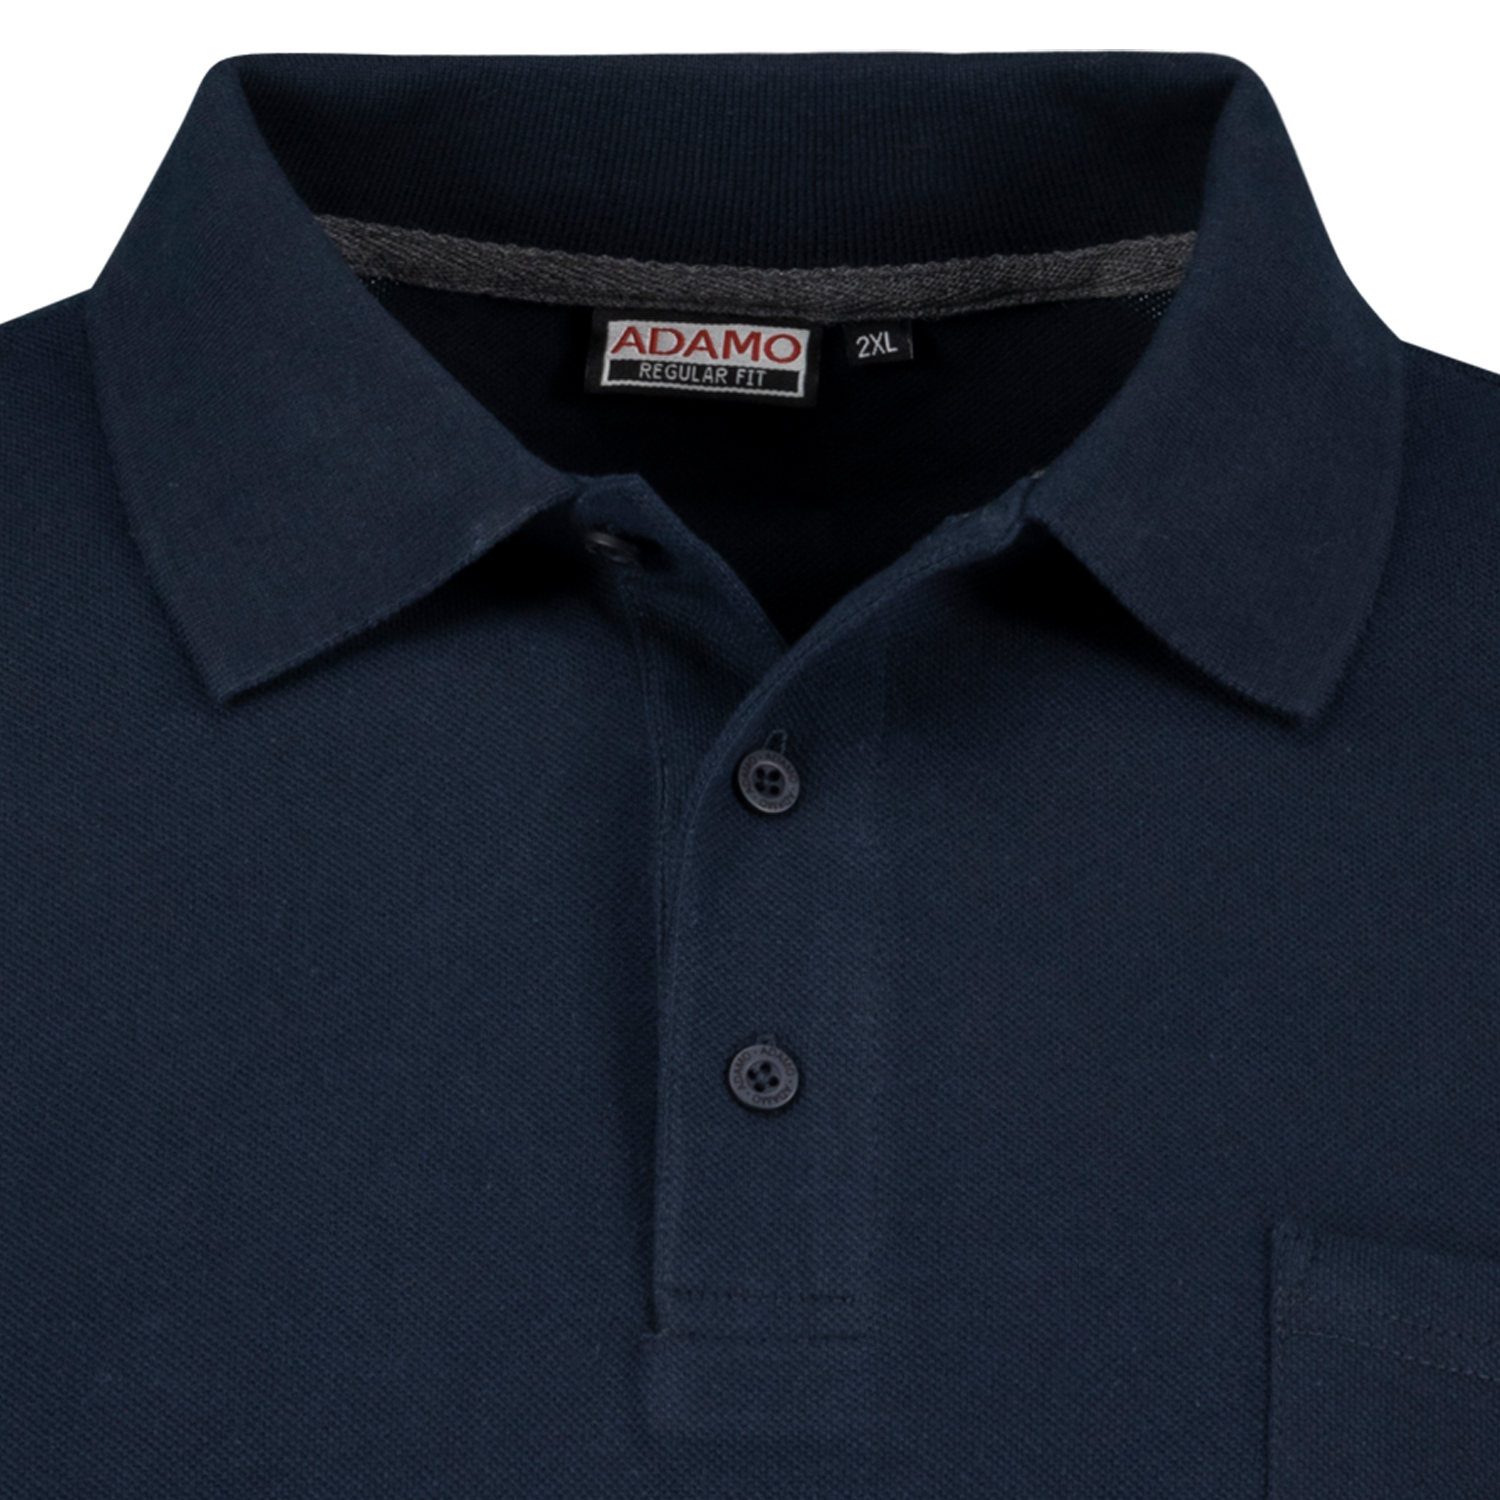 ADAMO Herren Pique Polohemd kurzärmlig Modell KENO in dunkelblau bis Übergröße 10XL Regular Fit